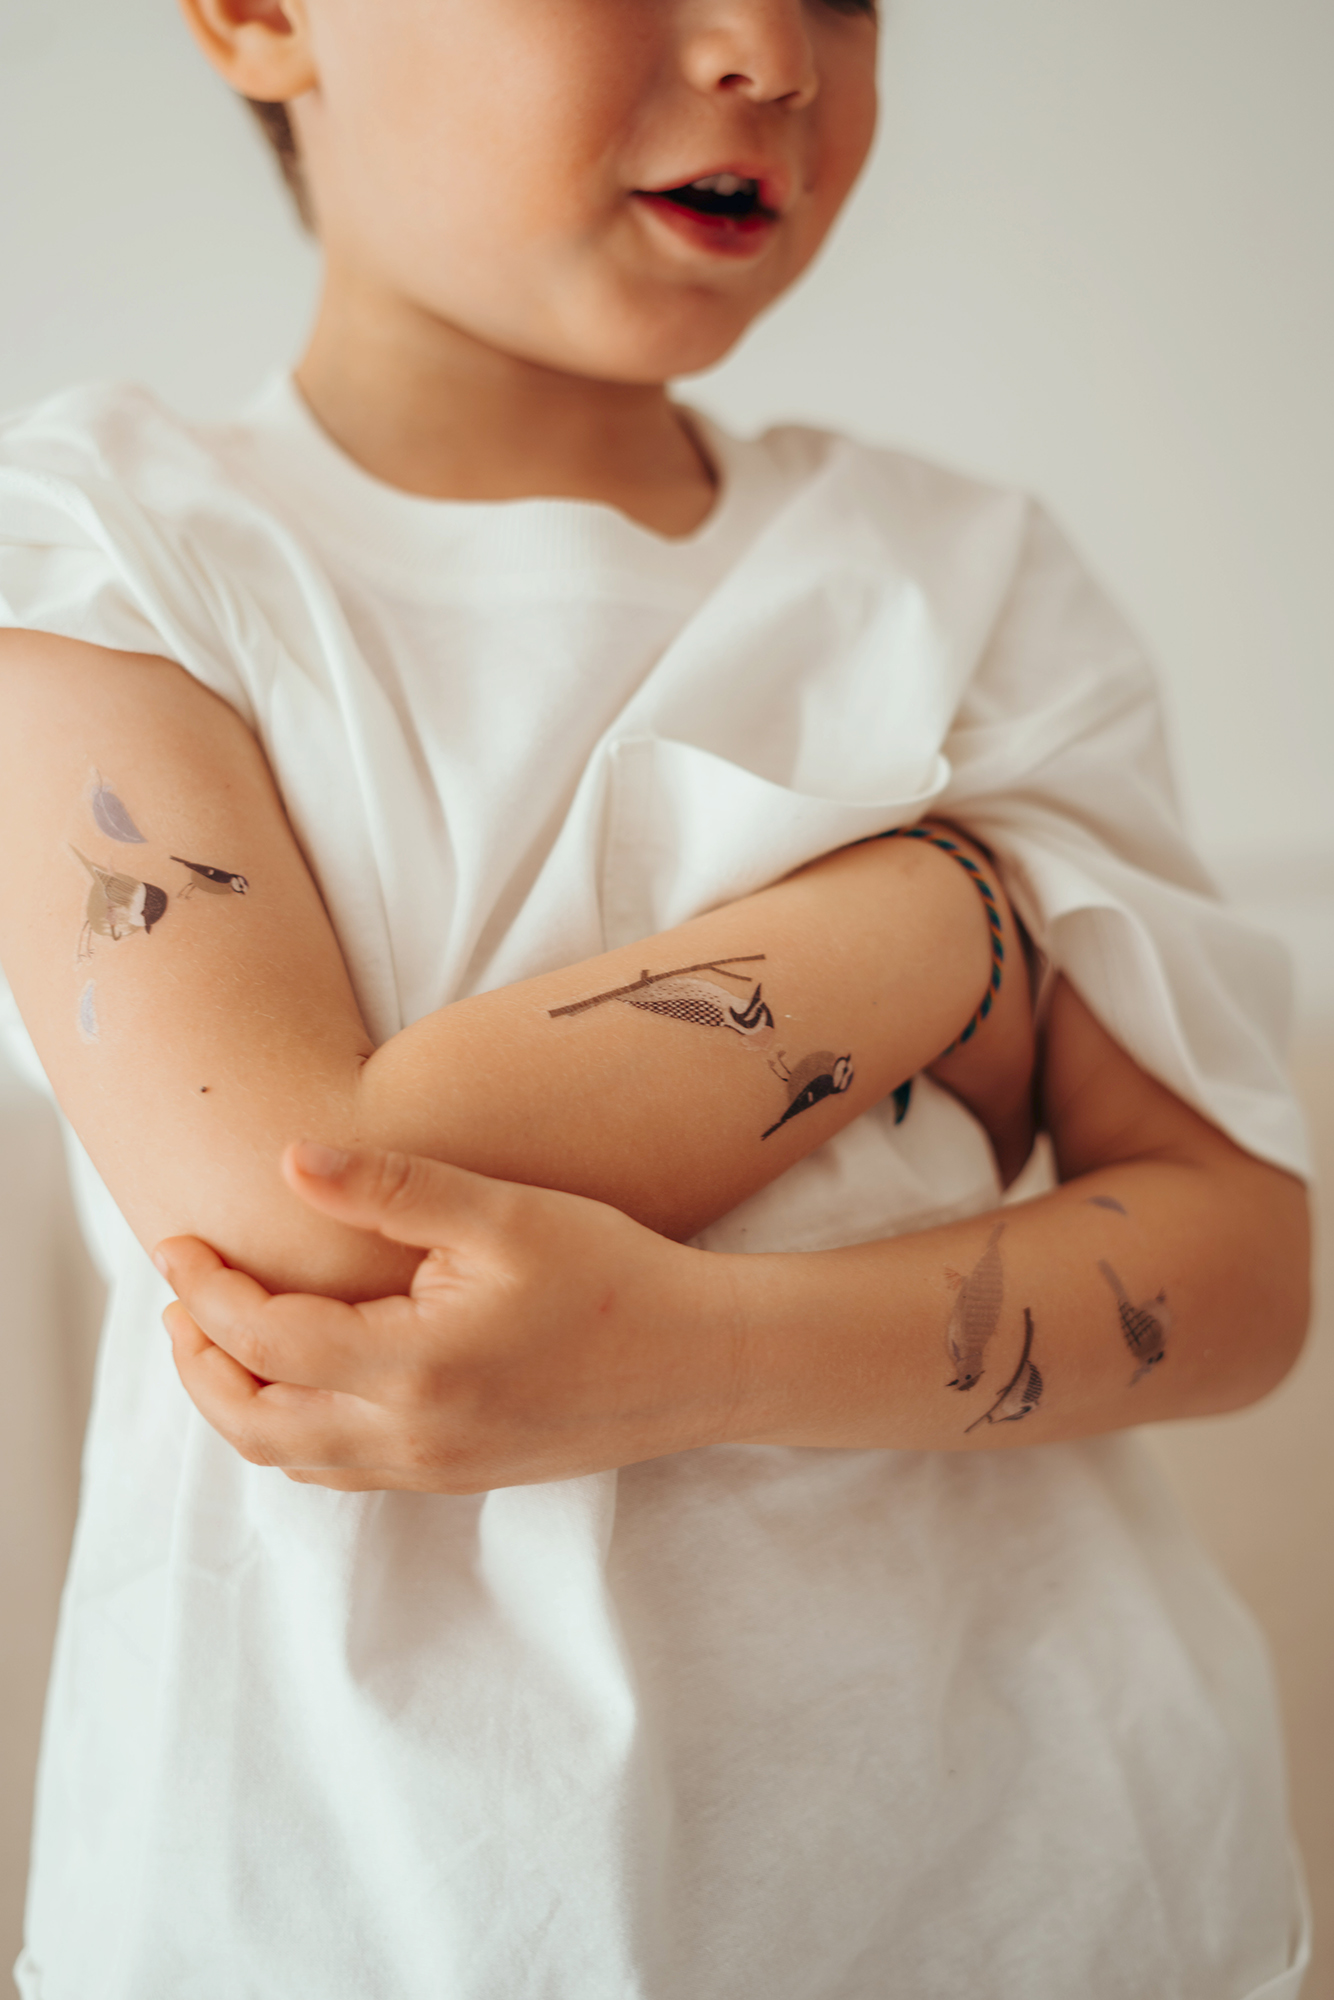 voegel-birds-tattoos-kinderarme-weißes-shirt-vegane-kindertattoos-nuukk